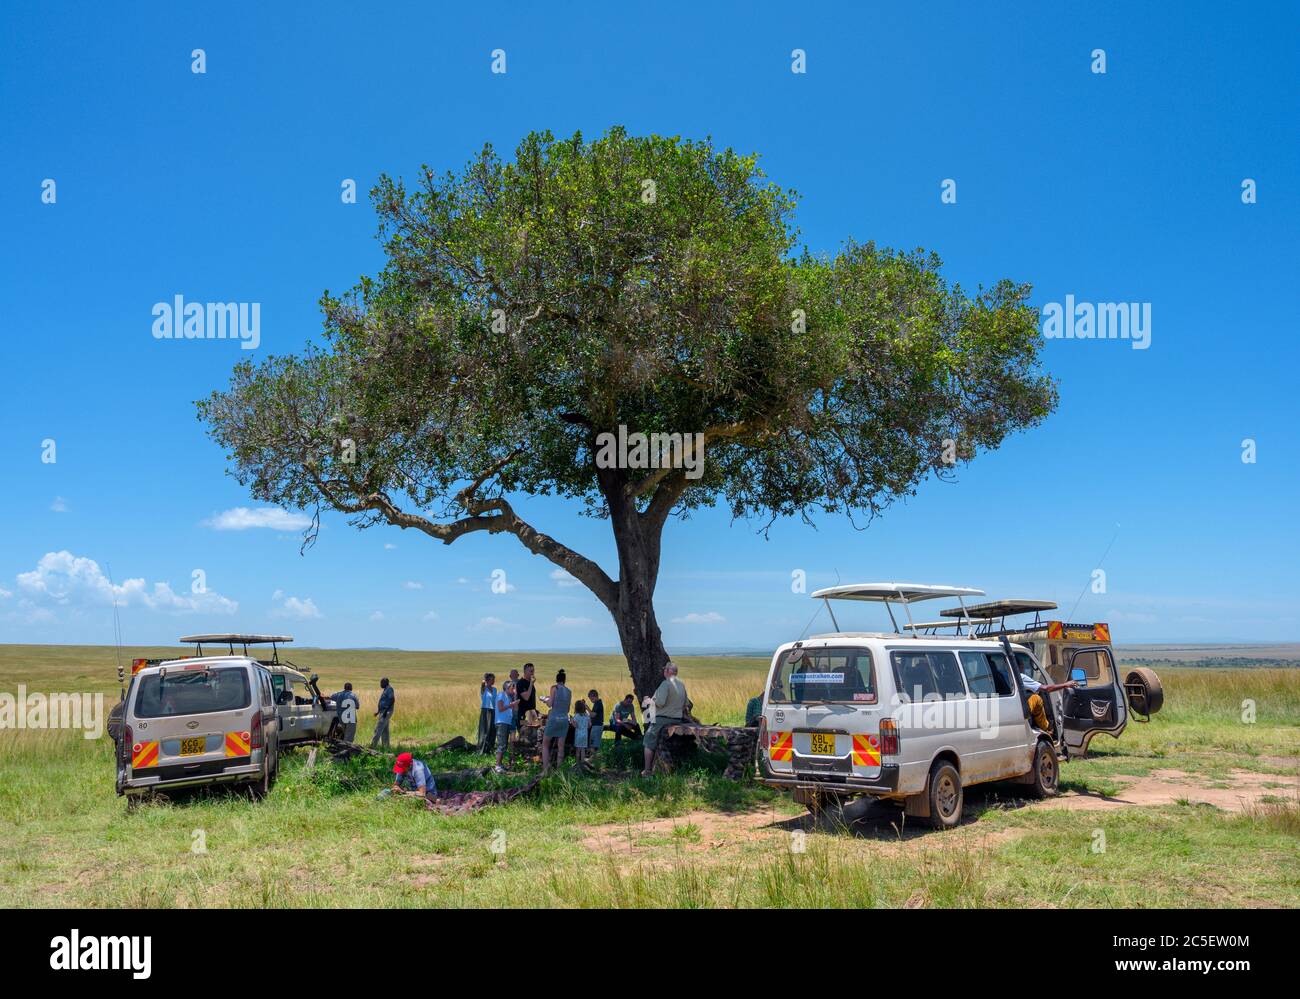 Safari vehicles and people having a picnic lunch under a tree, Mara Triangle, Masai Mara National Reserve, Kenya, Africa Stock Photo